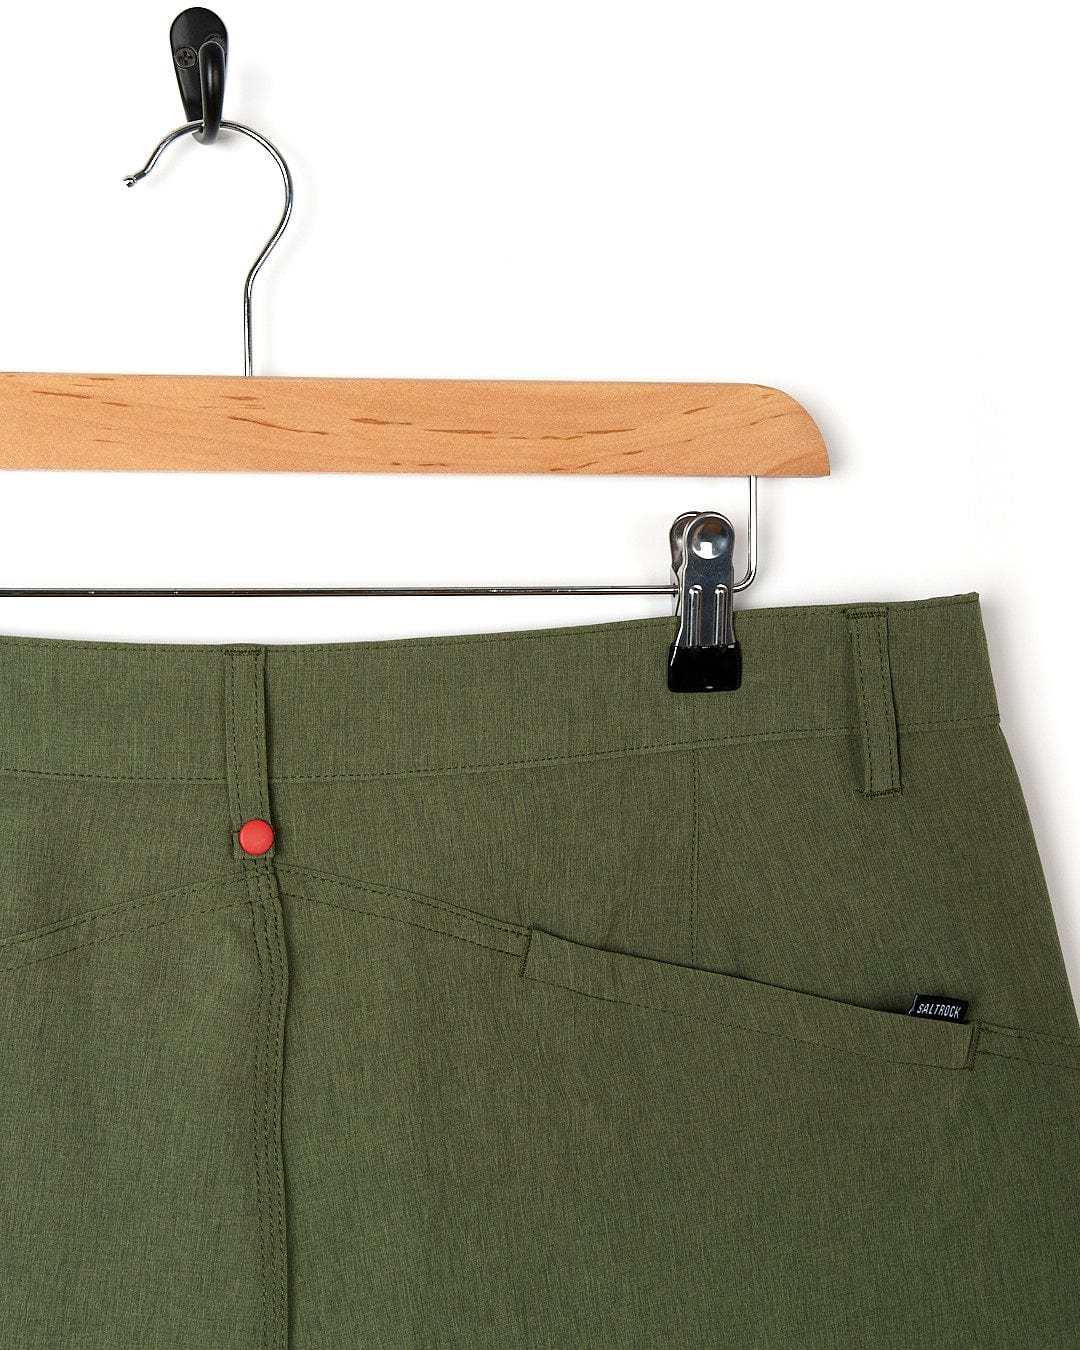 A pair of Saltrock Cargo Amphibian II - Mens Boardshort - Dark Green shorts hanging on a hanger.